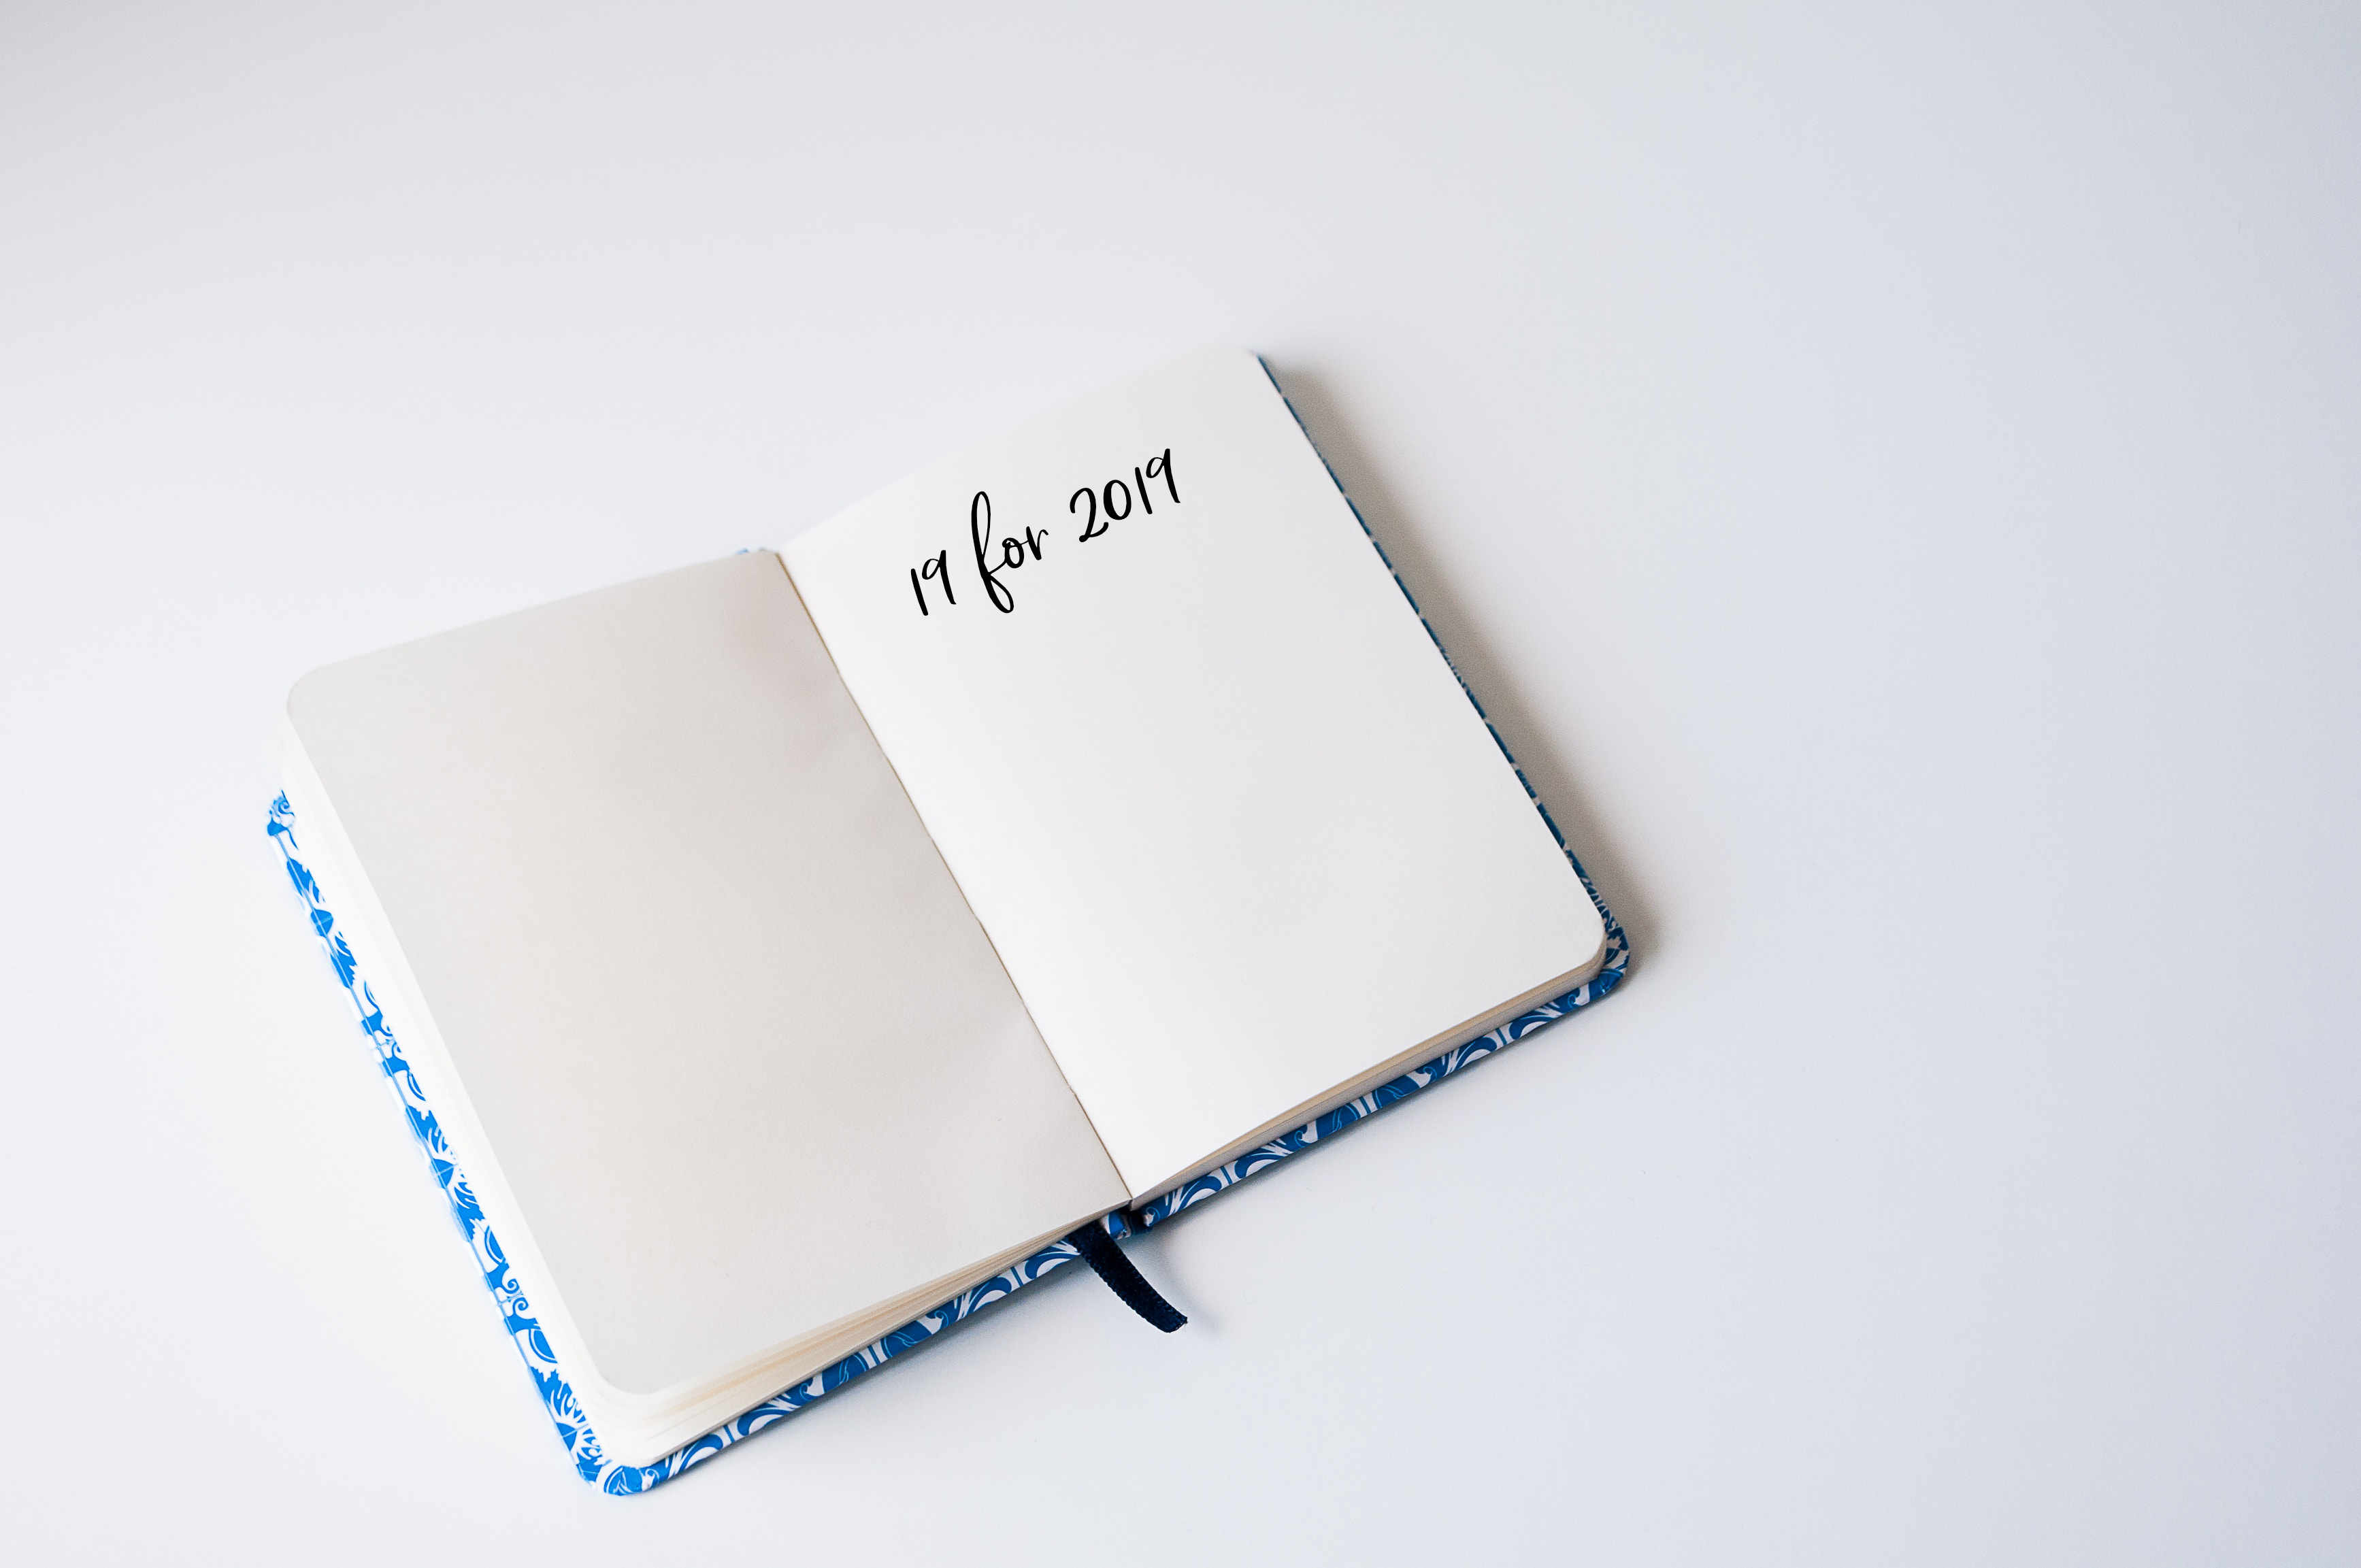 19 for 2019 notebook | Photo by Martha Dominguez de Gouveia on Unsplash